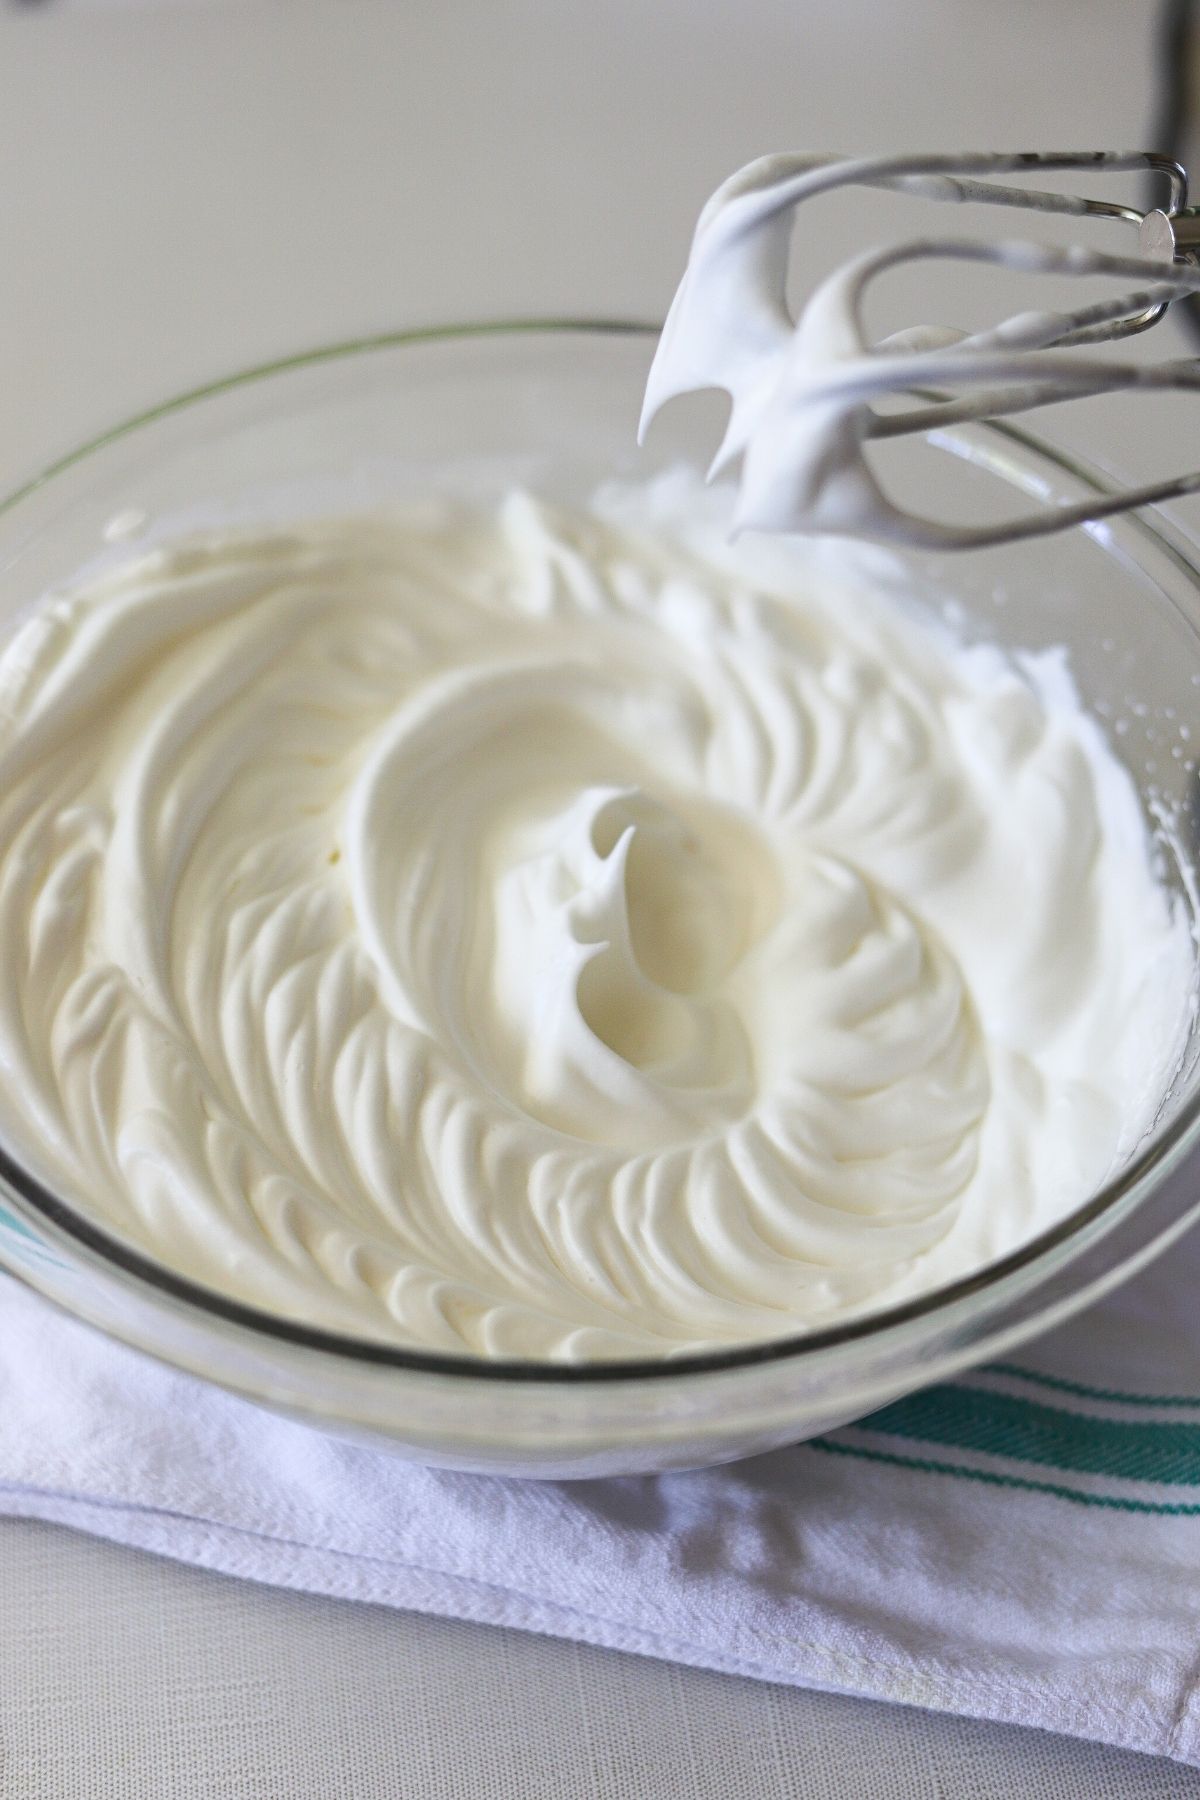 Egg whites in a glass bowl, beaten to stiff peaks